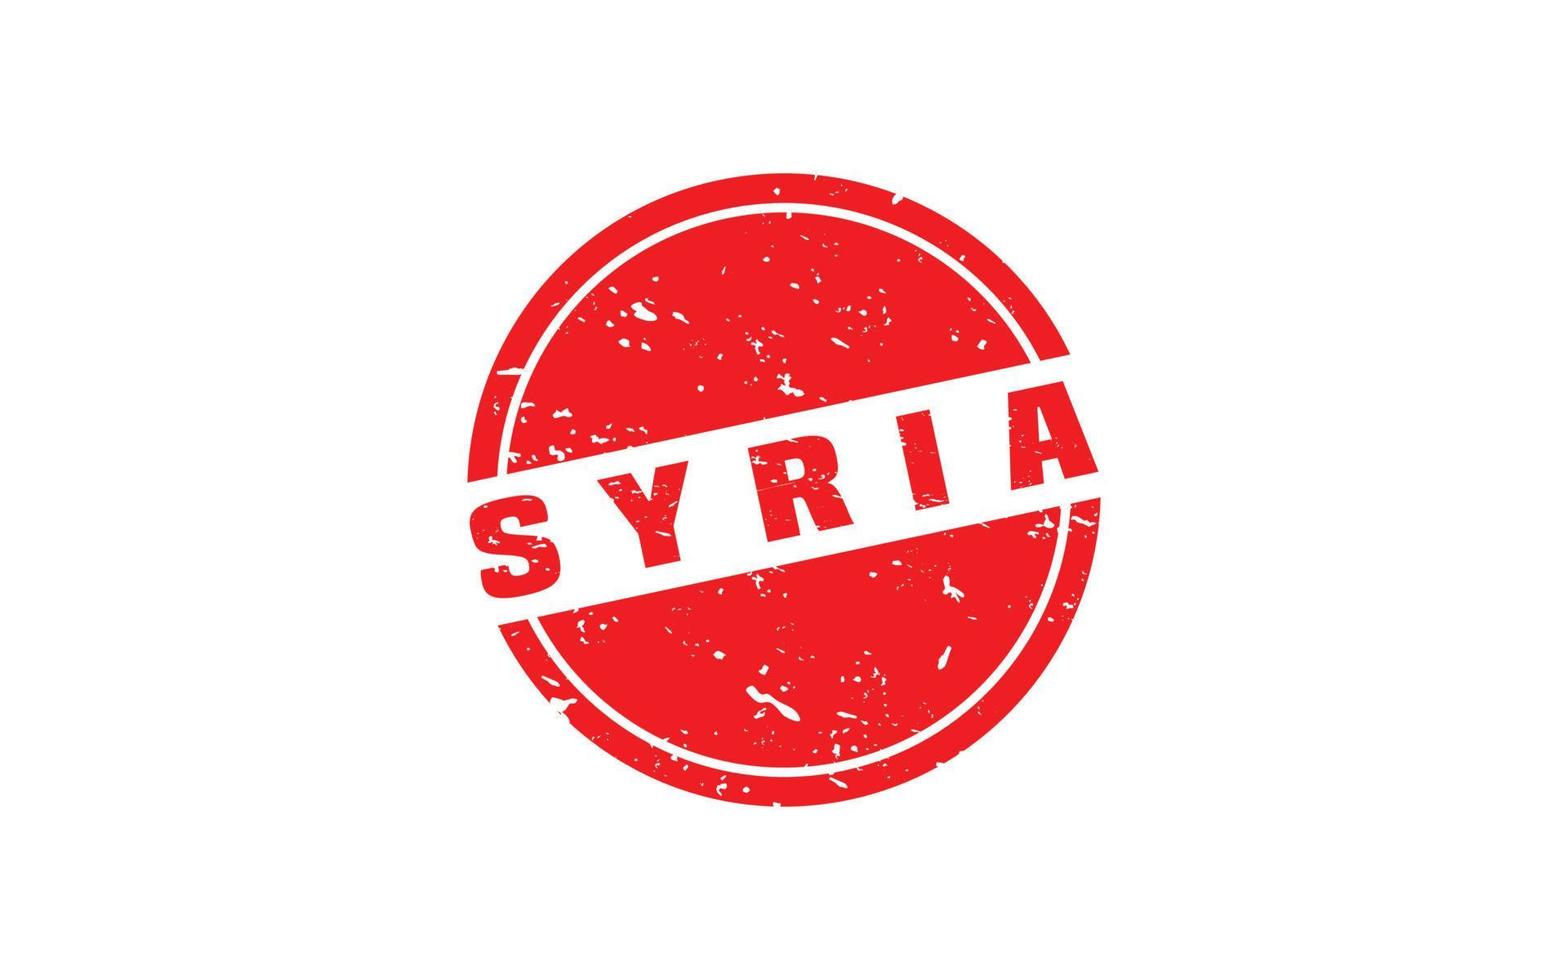 Síria carimbo borracha com grunge estilo em branco fundo vetor